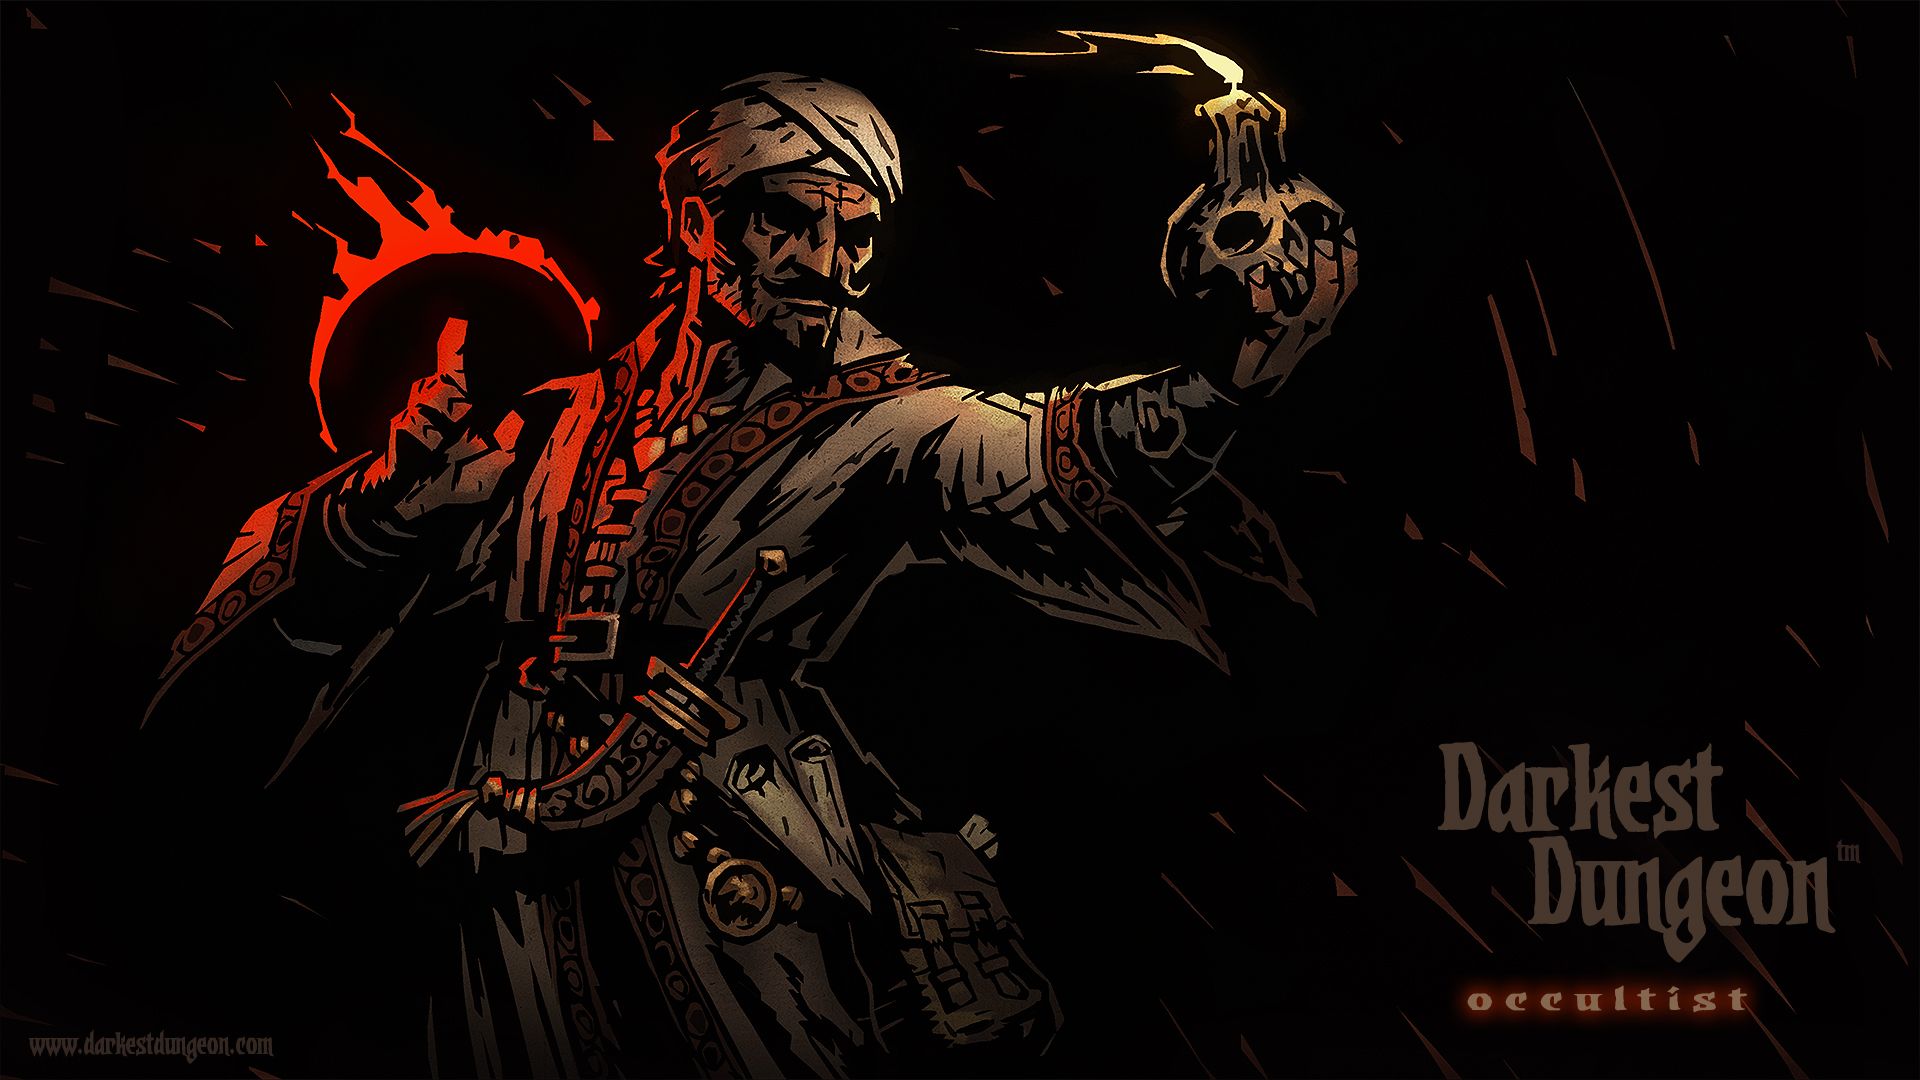 Darkest Dungeon  Wallpapers for Desktop Full HD  Darkest dungeon  Dungeon Dark fantasy